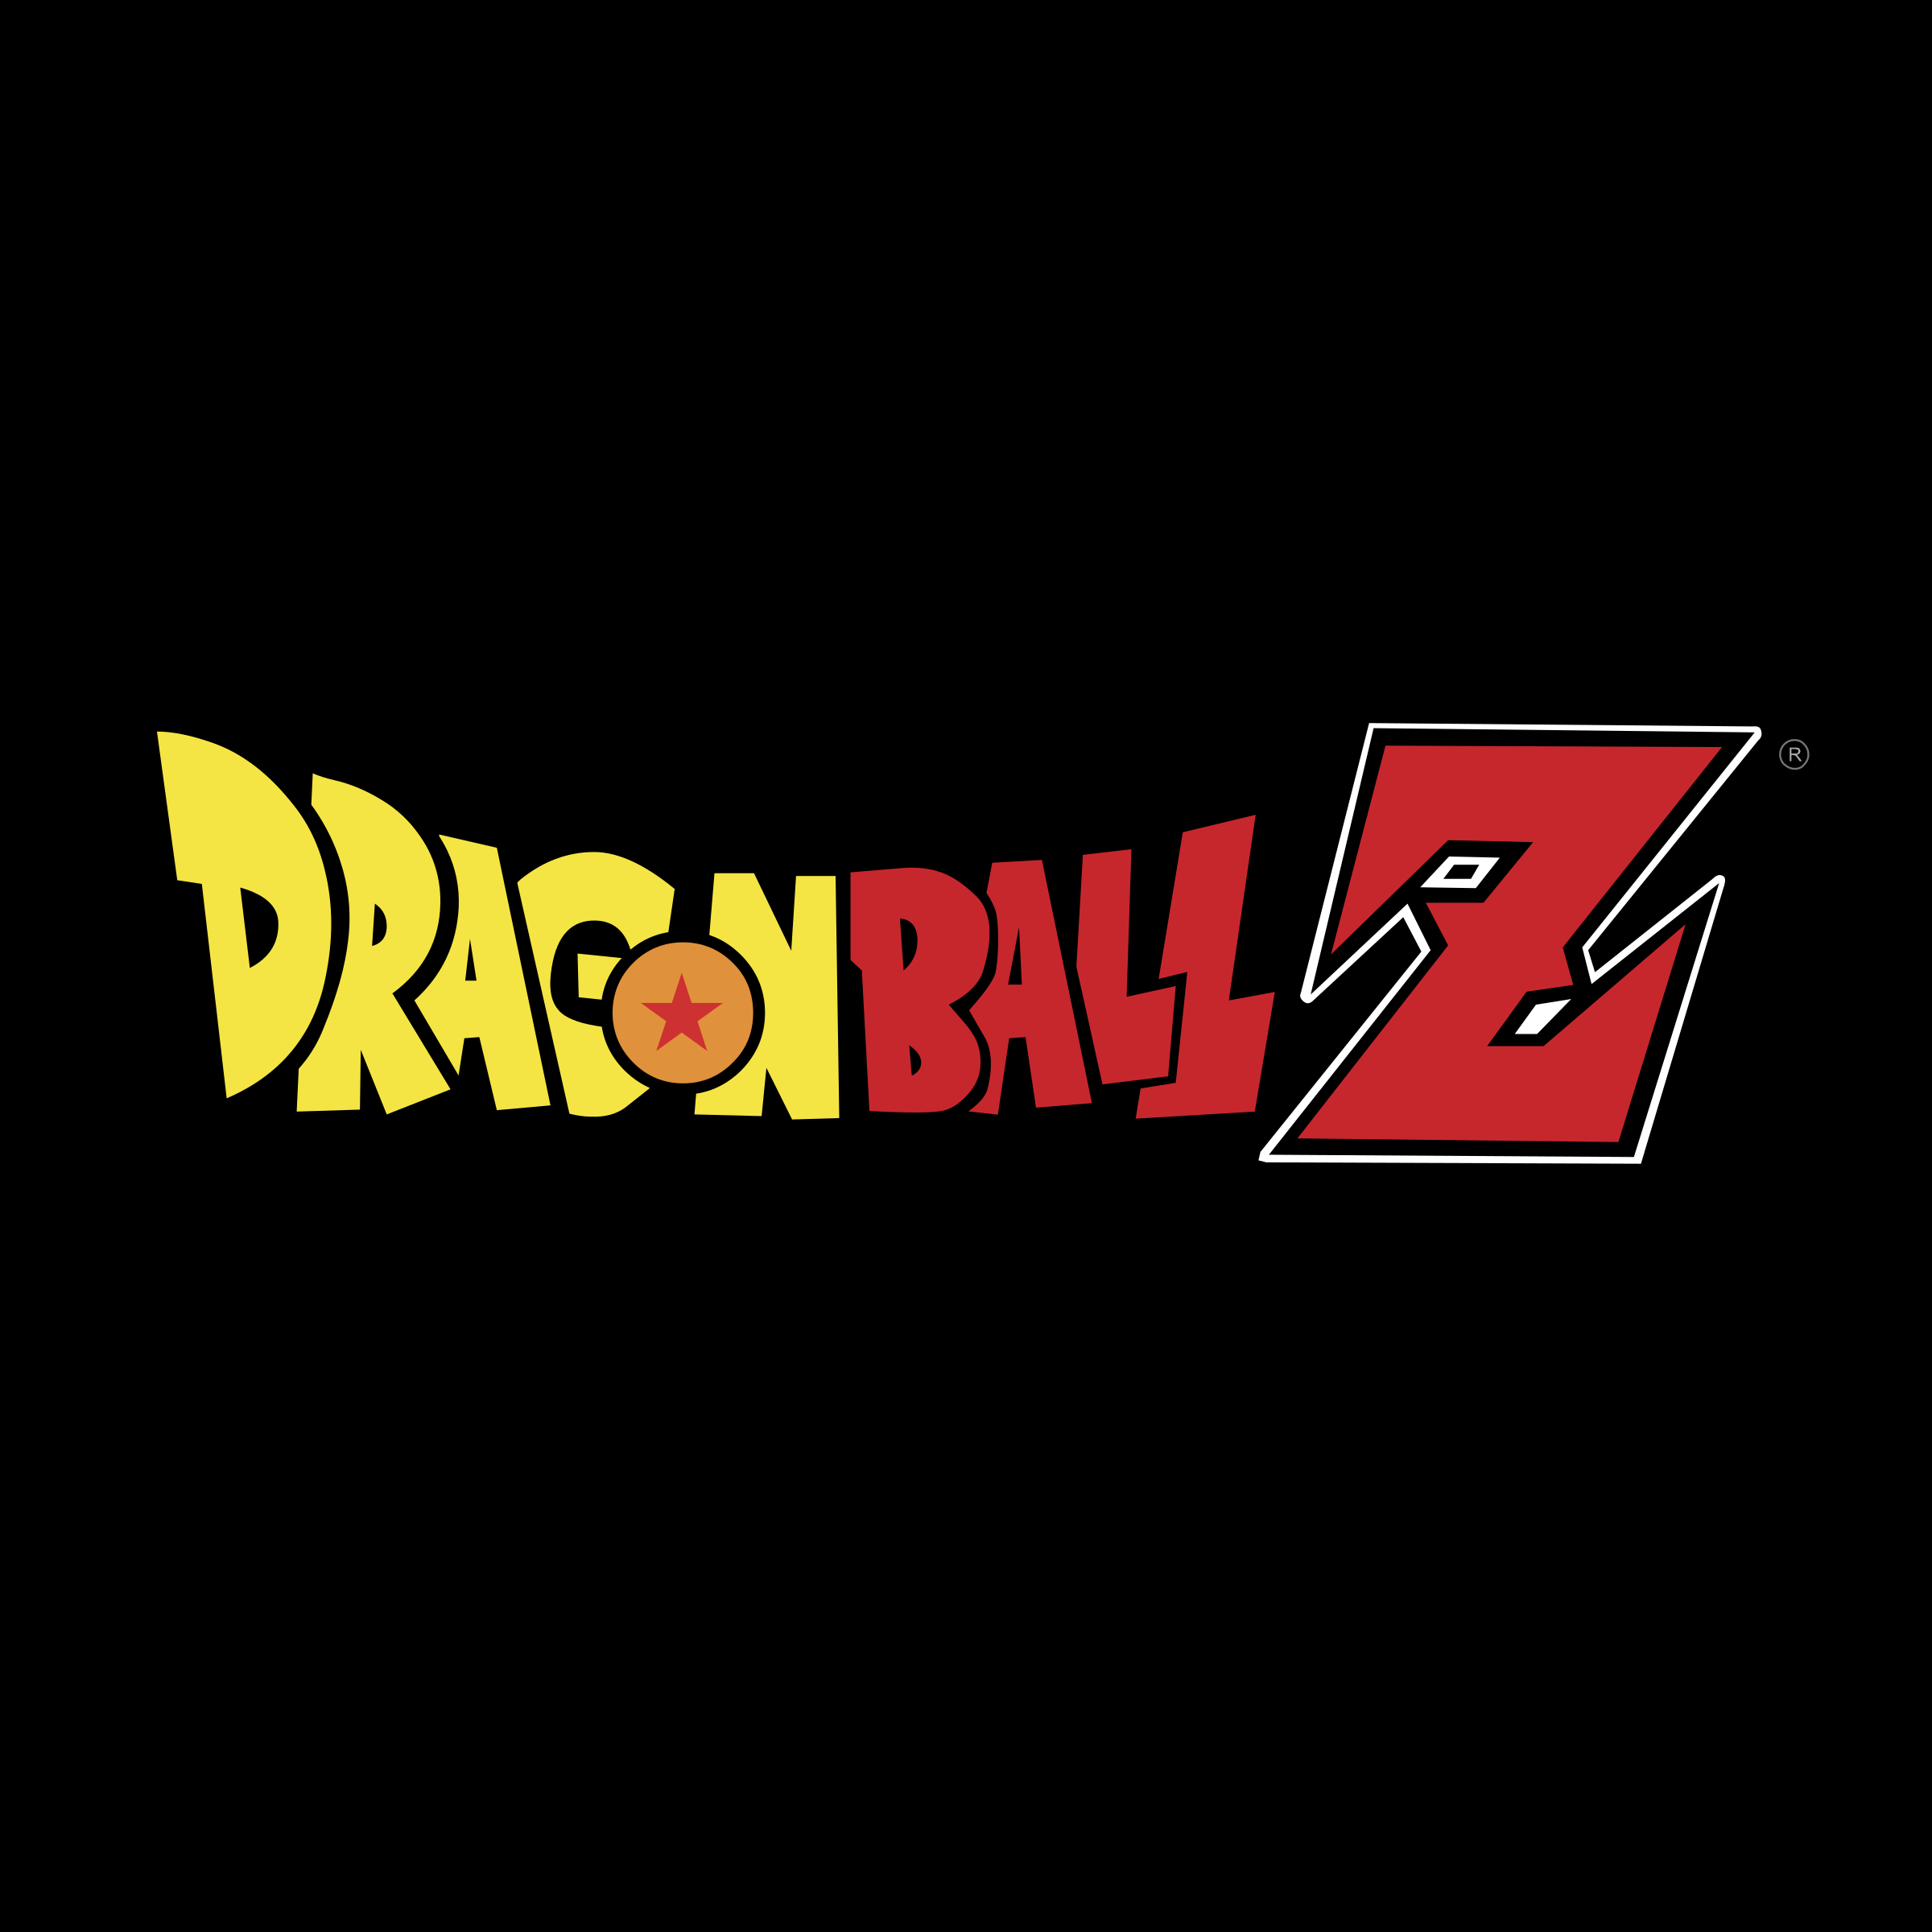 Black with a Z Logo - Dragon Ball Z Logo PNG Transparent & SVG Vector - Freebie Supply